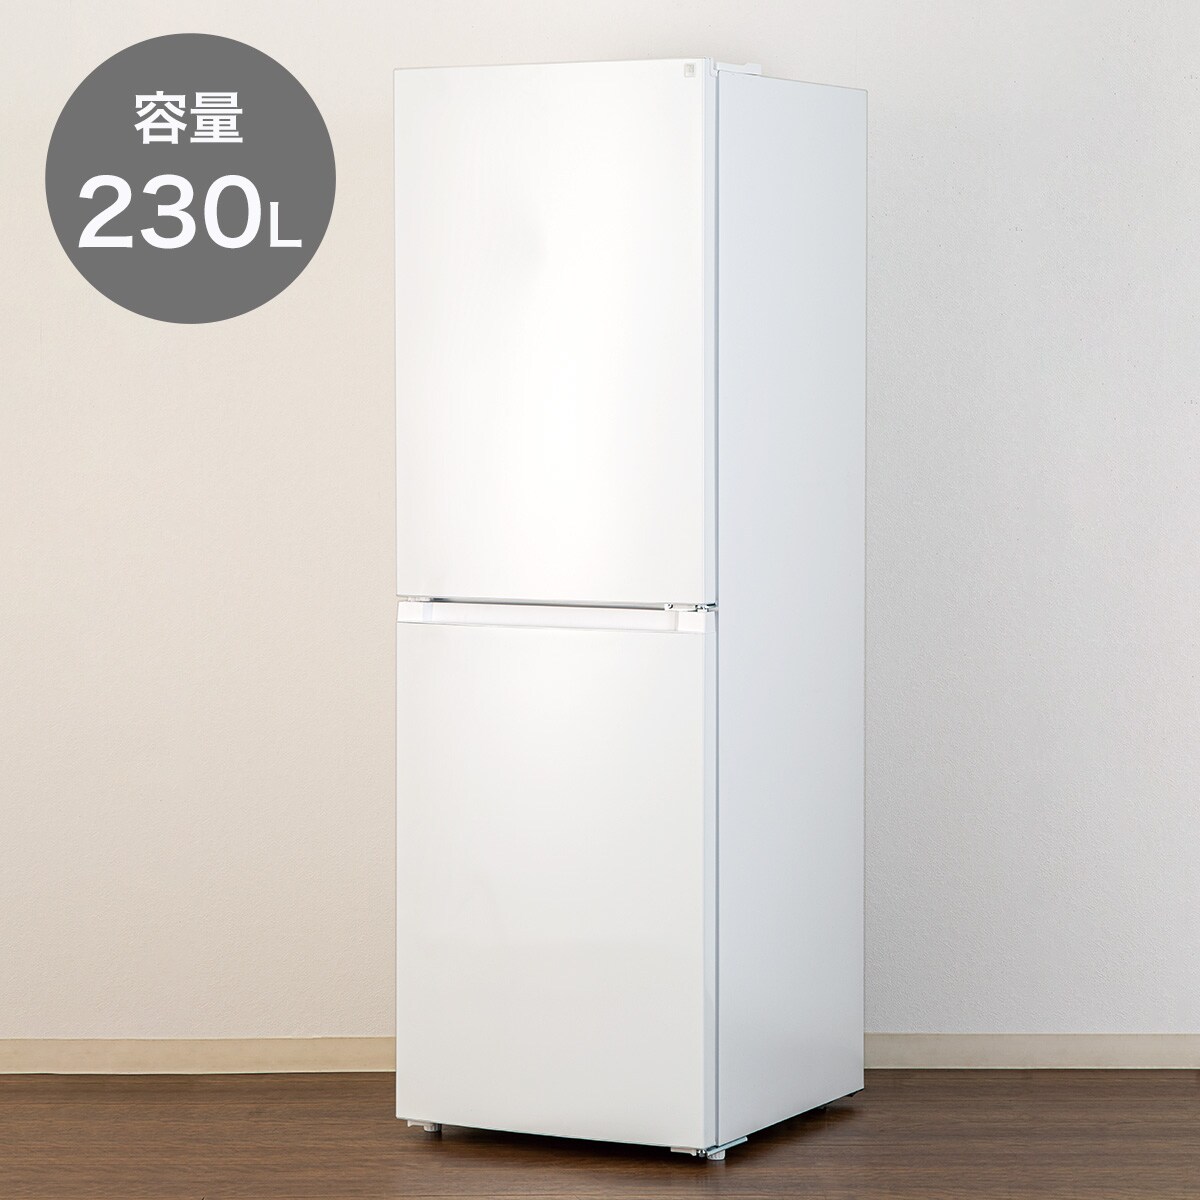 230L 2ドアファン式冷凍冷蔵庫(NR-230F ホワイト) リサイクル回収あり